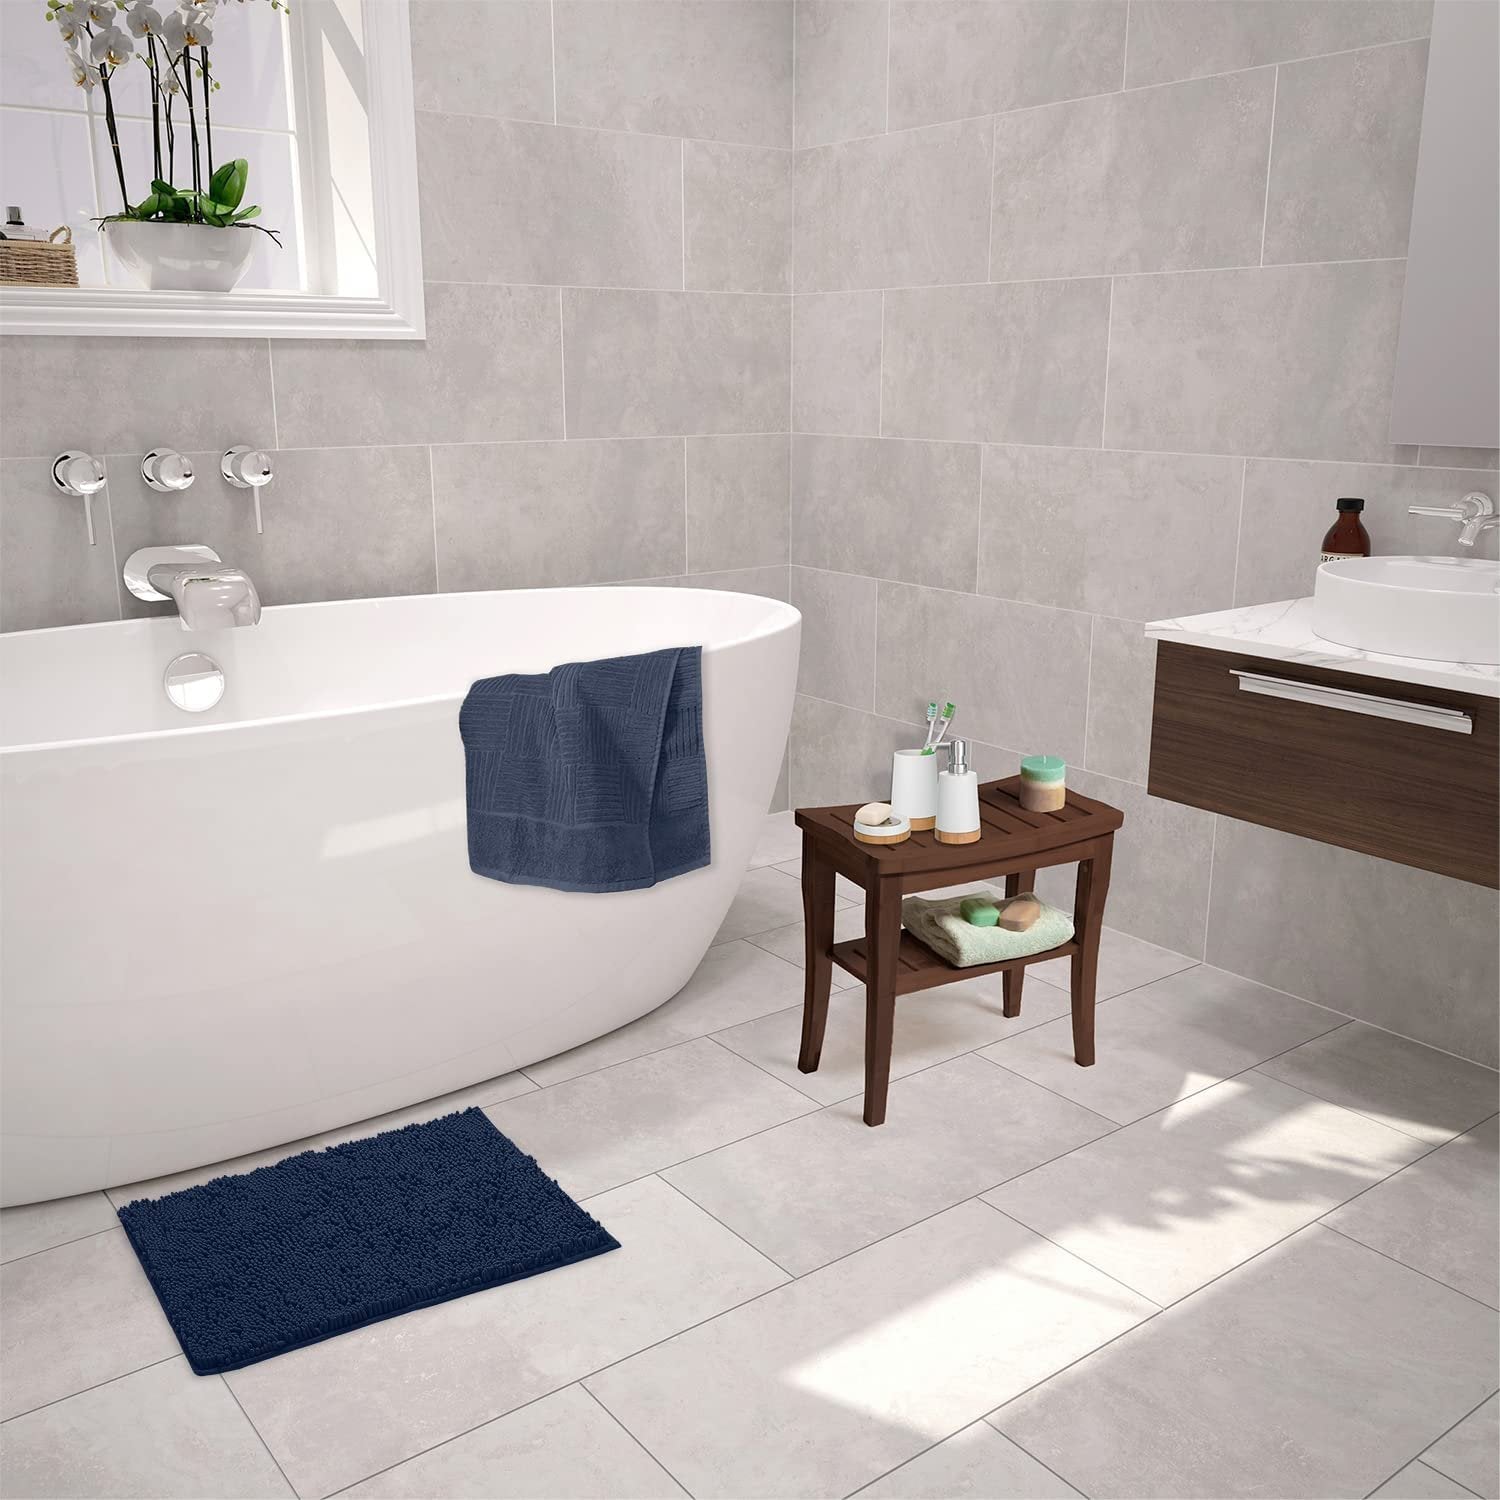 LuxUrux Lavender Bathroom Rugs-Extra-Soft Plush Bath Shower Bathroom Rug,1'' Chenille Microfiber Material, Super Absorbent Shaggy Bath Rug. Machine Wash & Dry (15 x 23, Lavender)